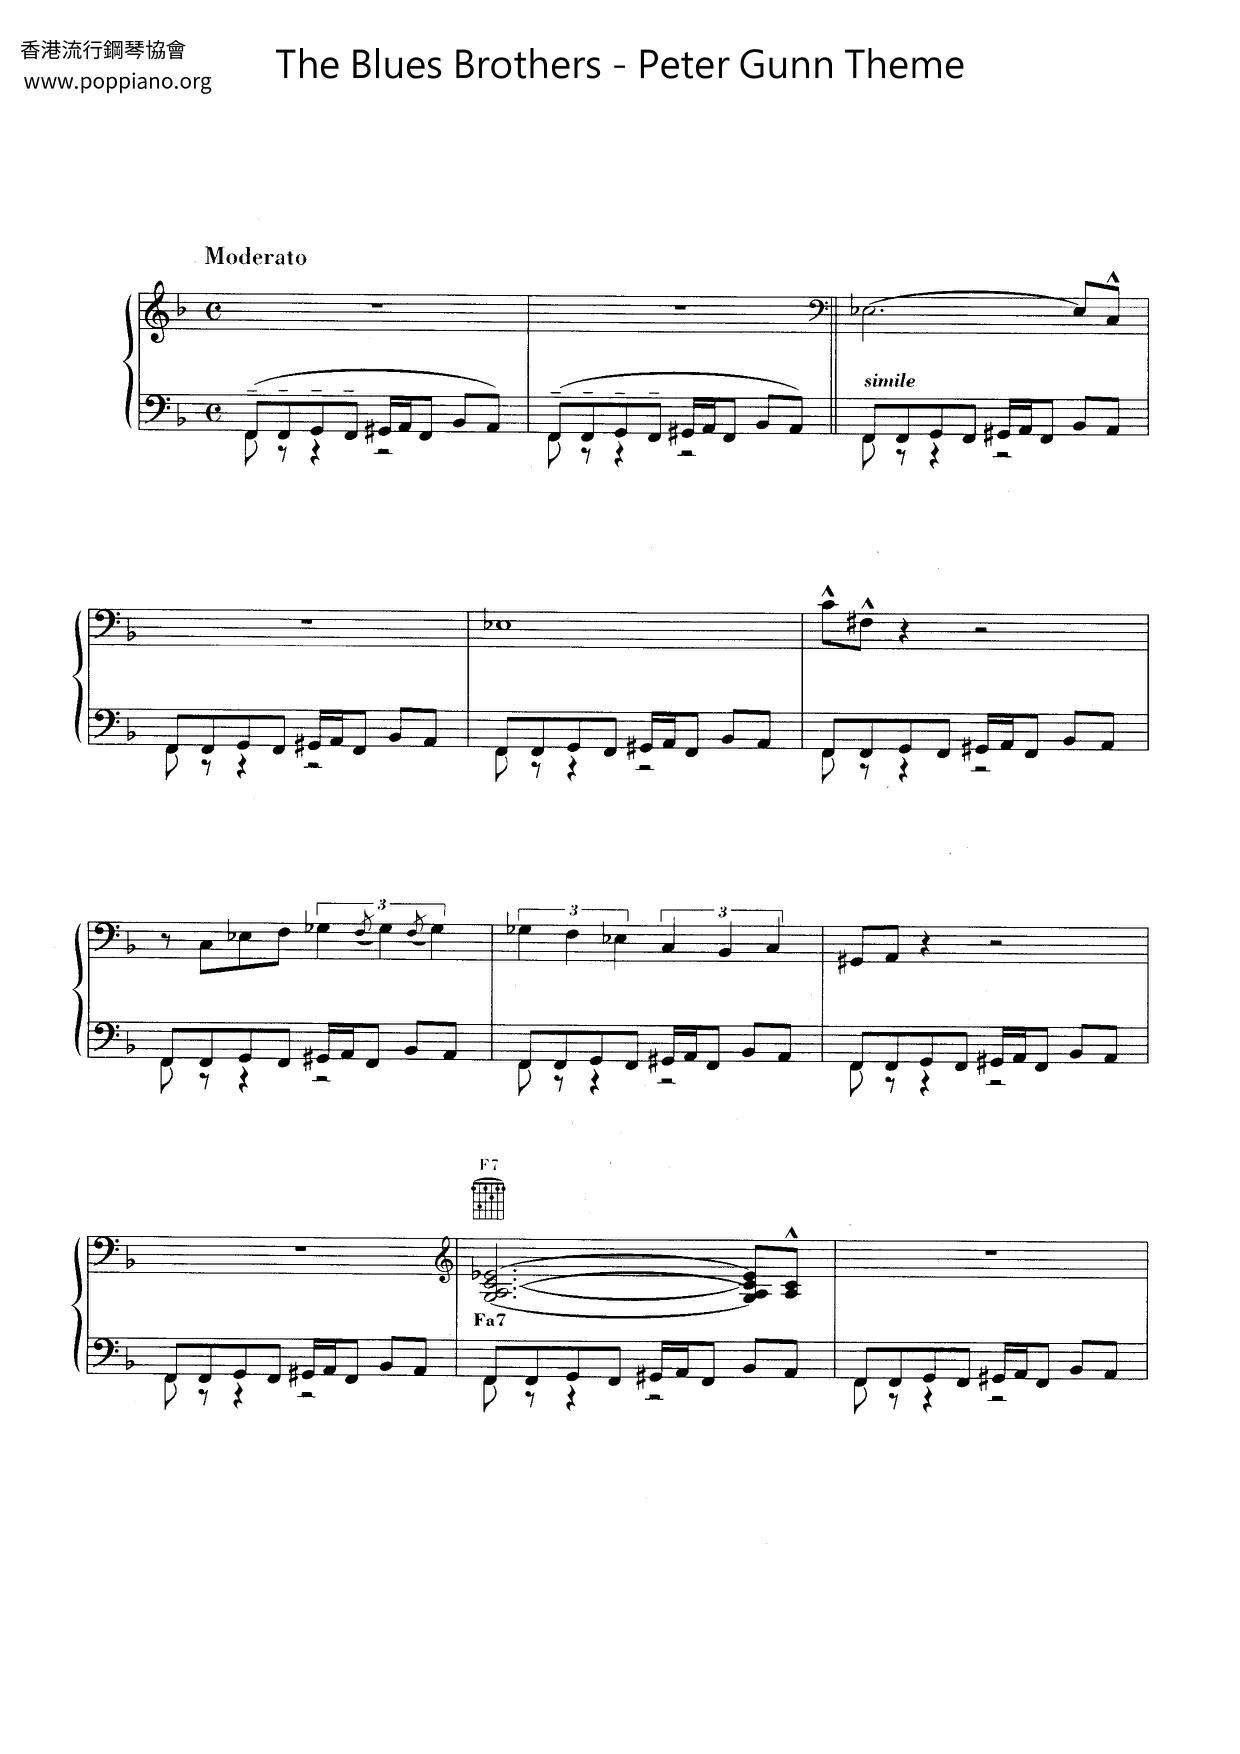 Peter Gunn Theme Score